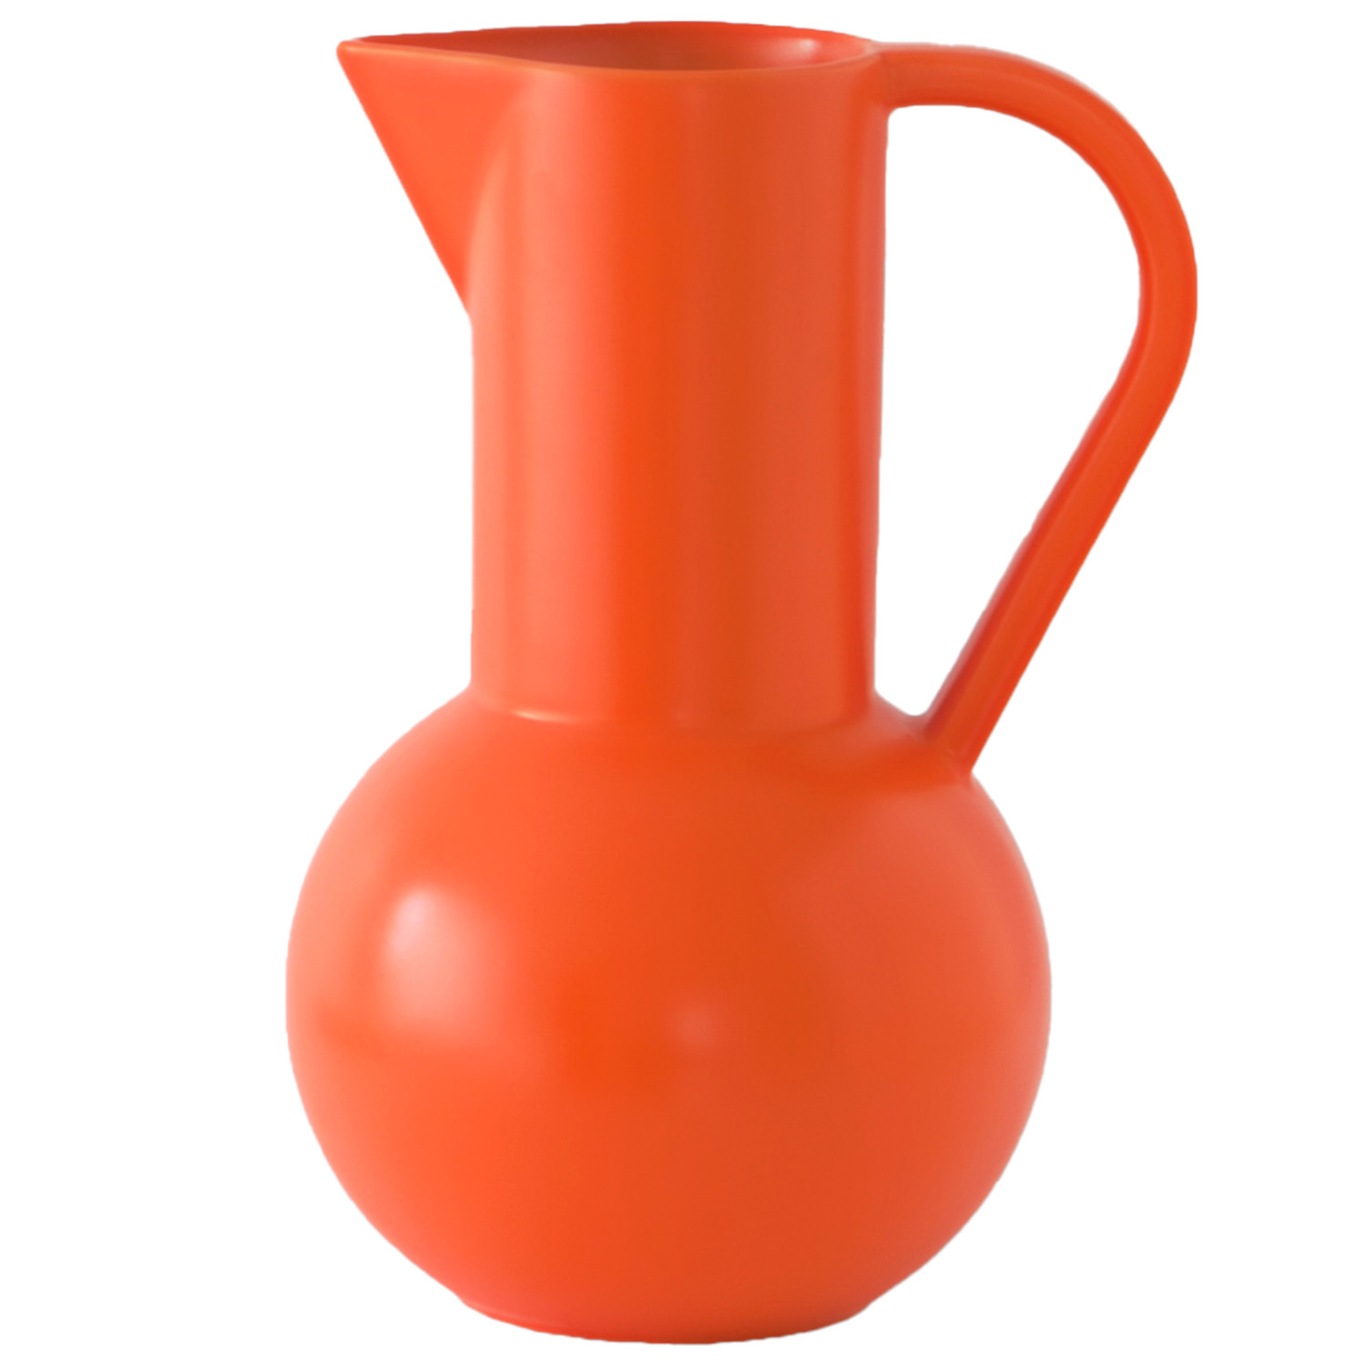 Strøm Mugge 1.5 L, Vibrant Orange